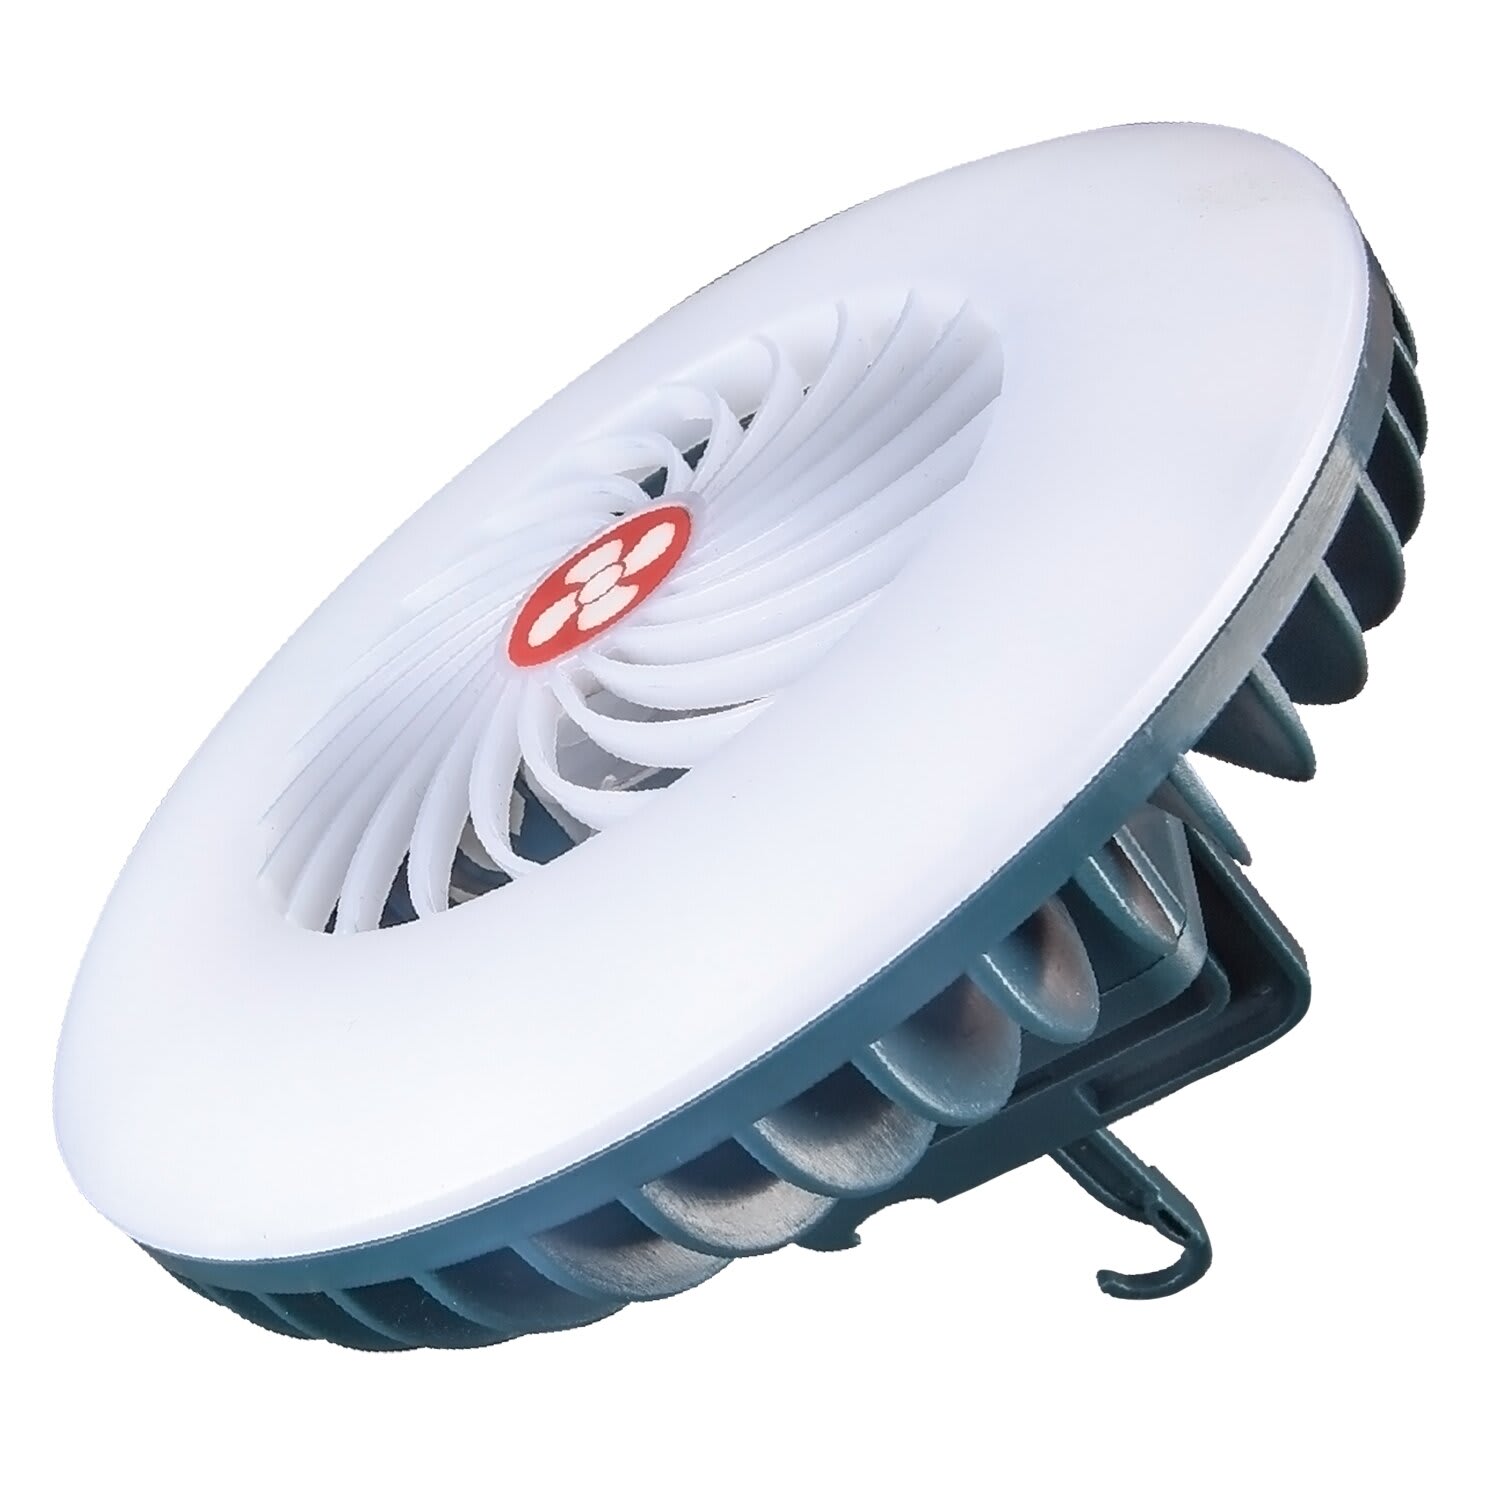 VVU&CCO Portable Camping Fan with Lantern Light-8.3 Algeria